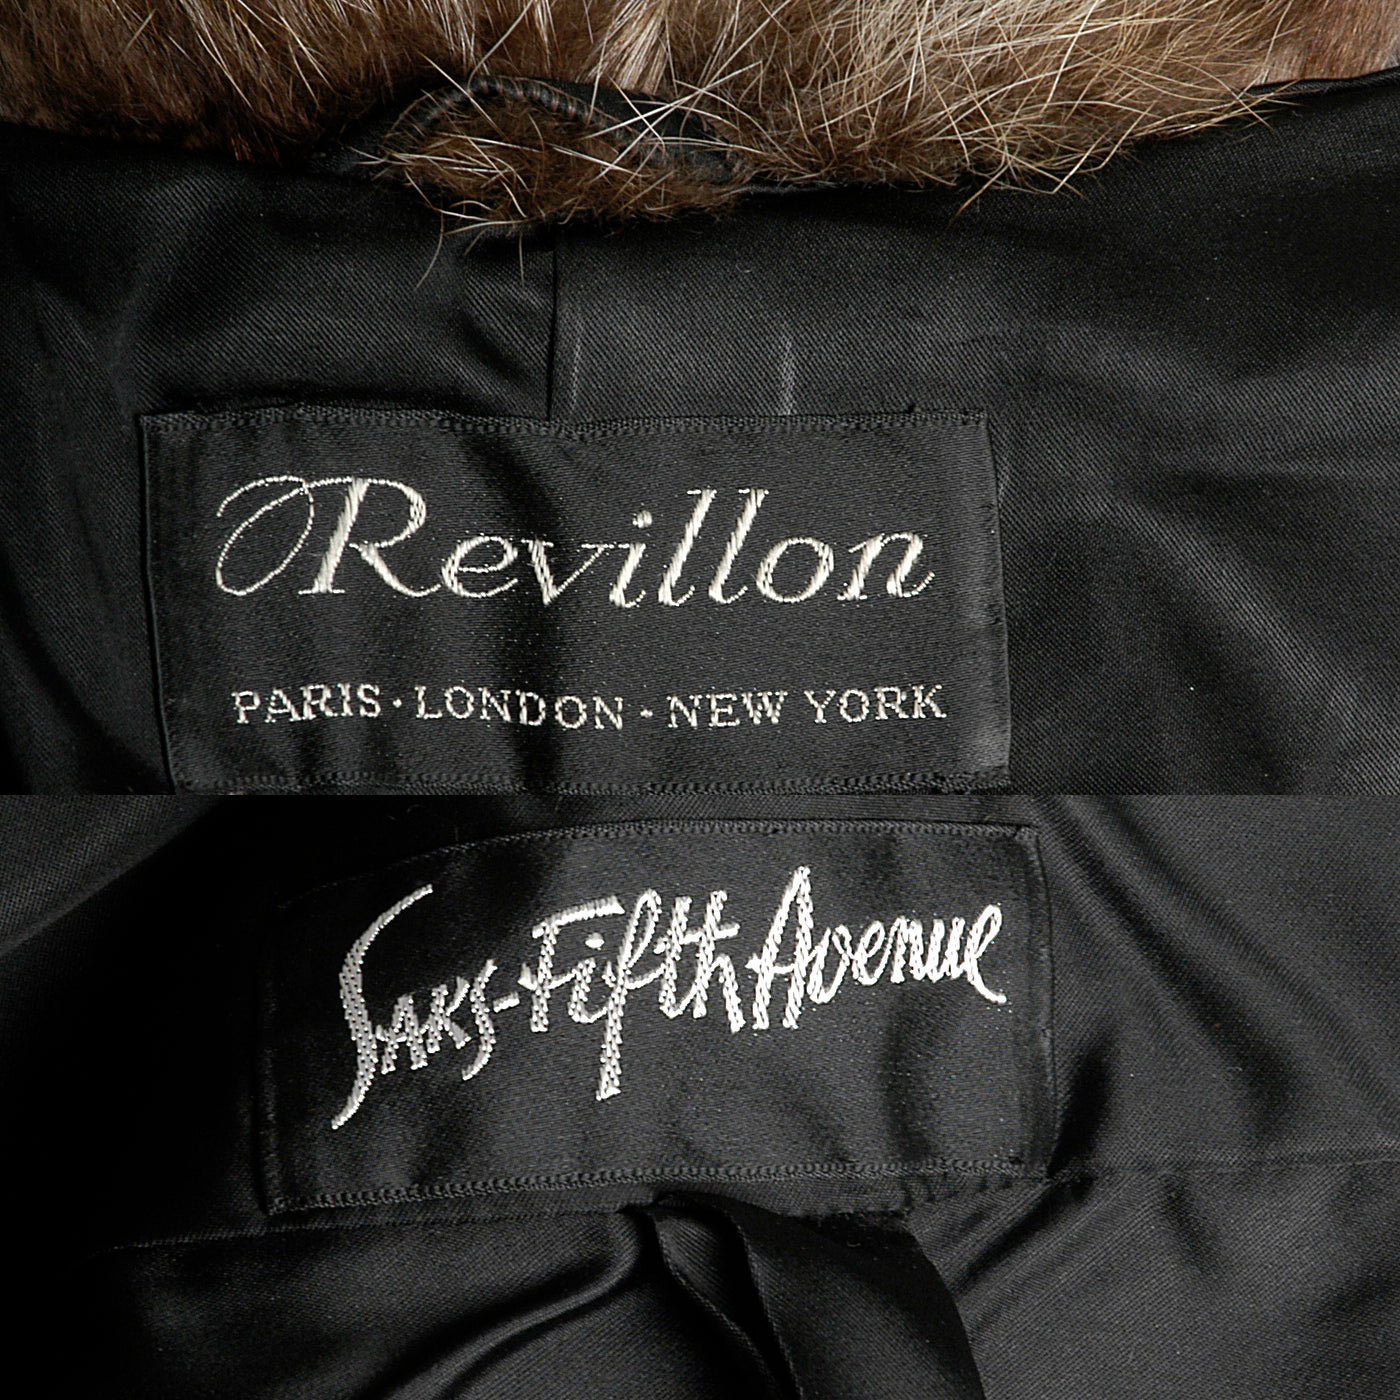 Full Length Saks Fifth Avenue Raccoon Fur Stroller Coat Revillon Winter Column